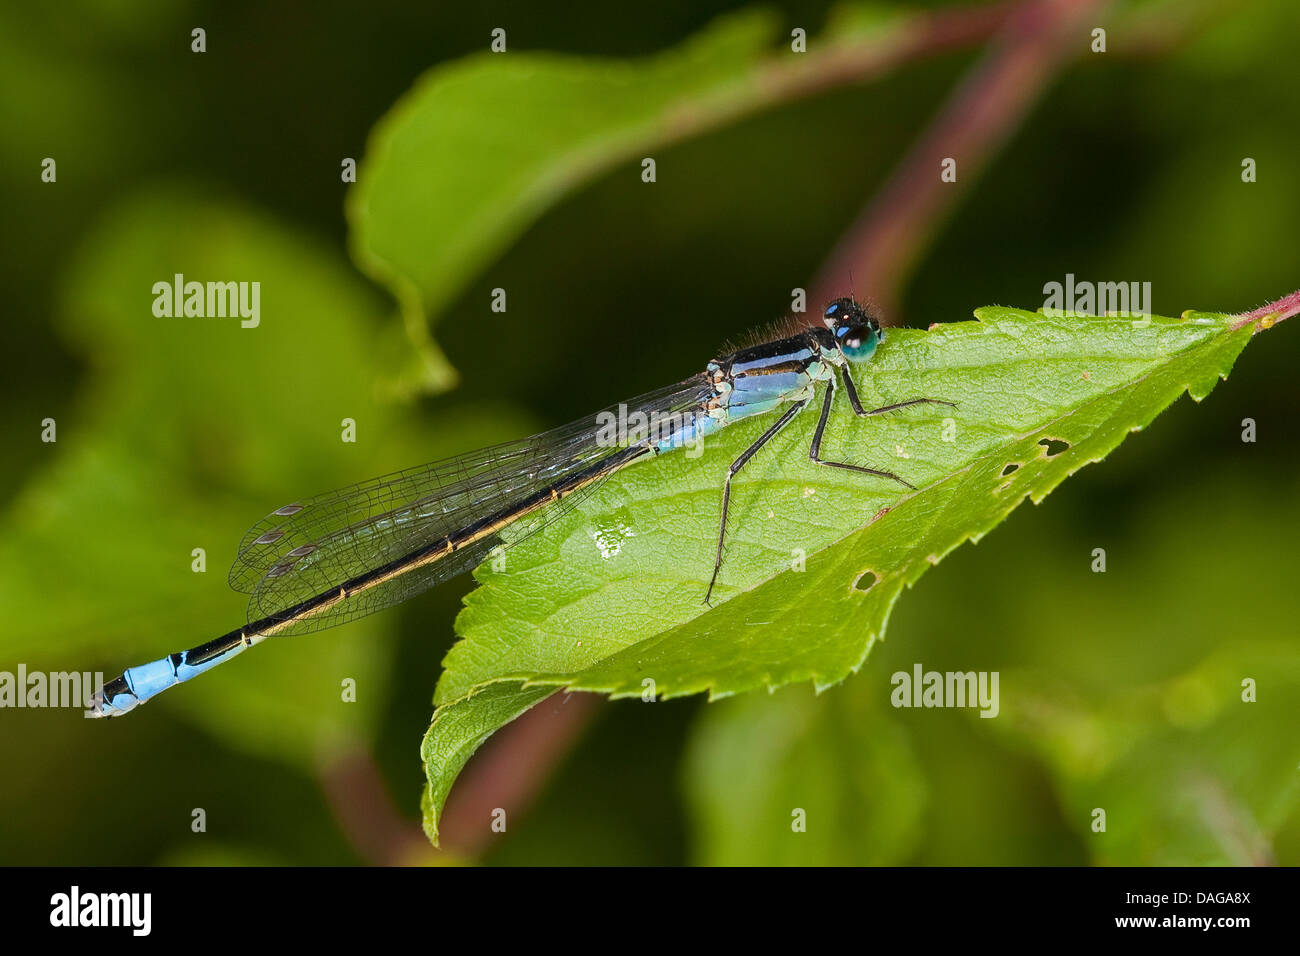 common ischnura, blue-tailed damselfly (Ischnura elegans), sitting on a leaf, Germany Stock Photo